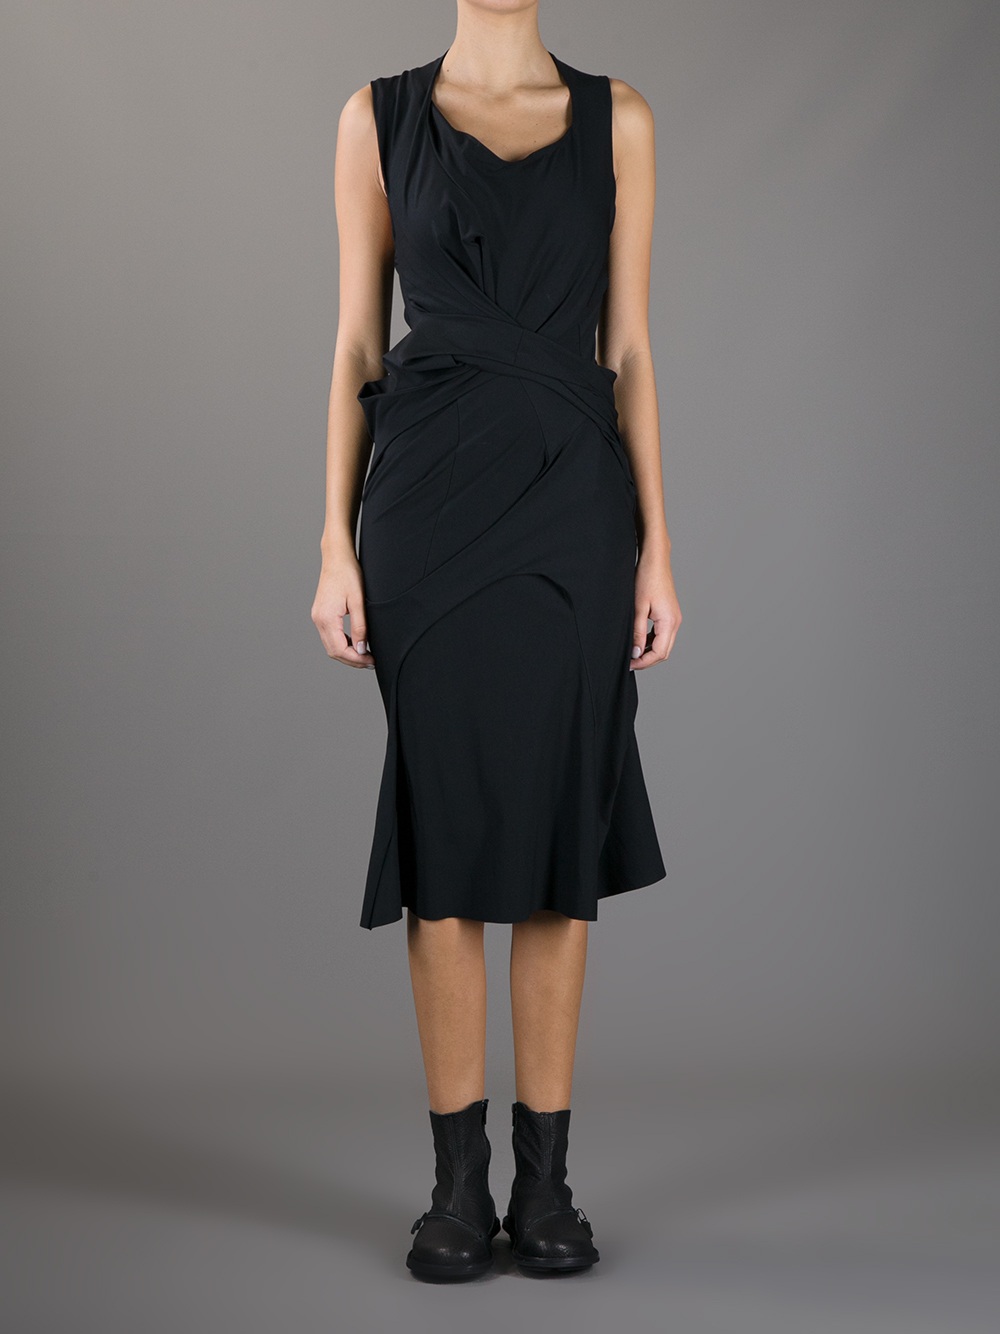 Junya watanabe Sleeveless Dress in Black | Lyst